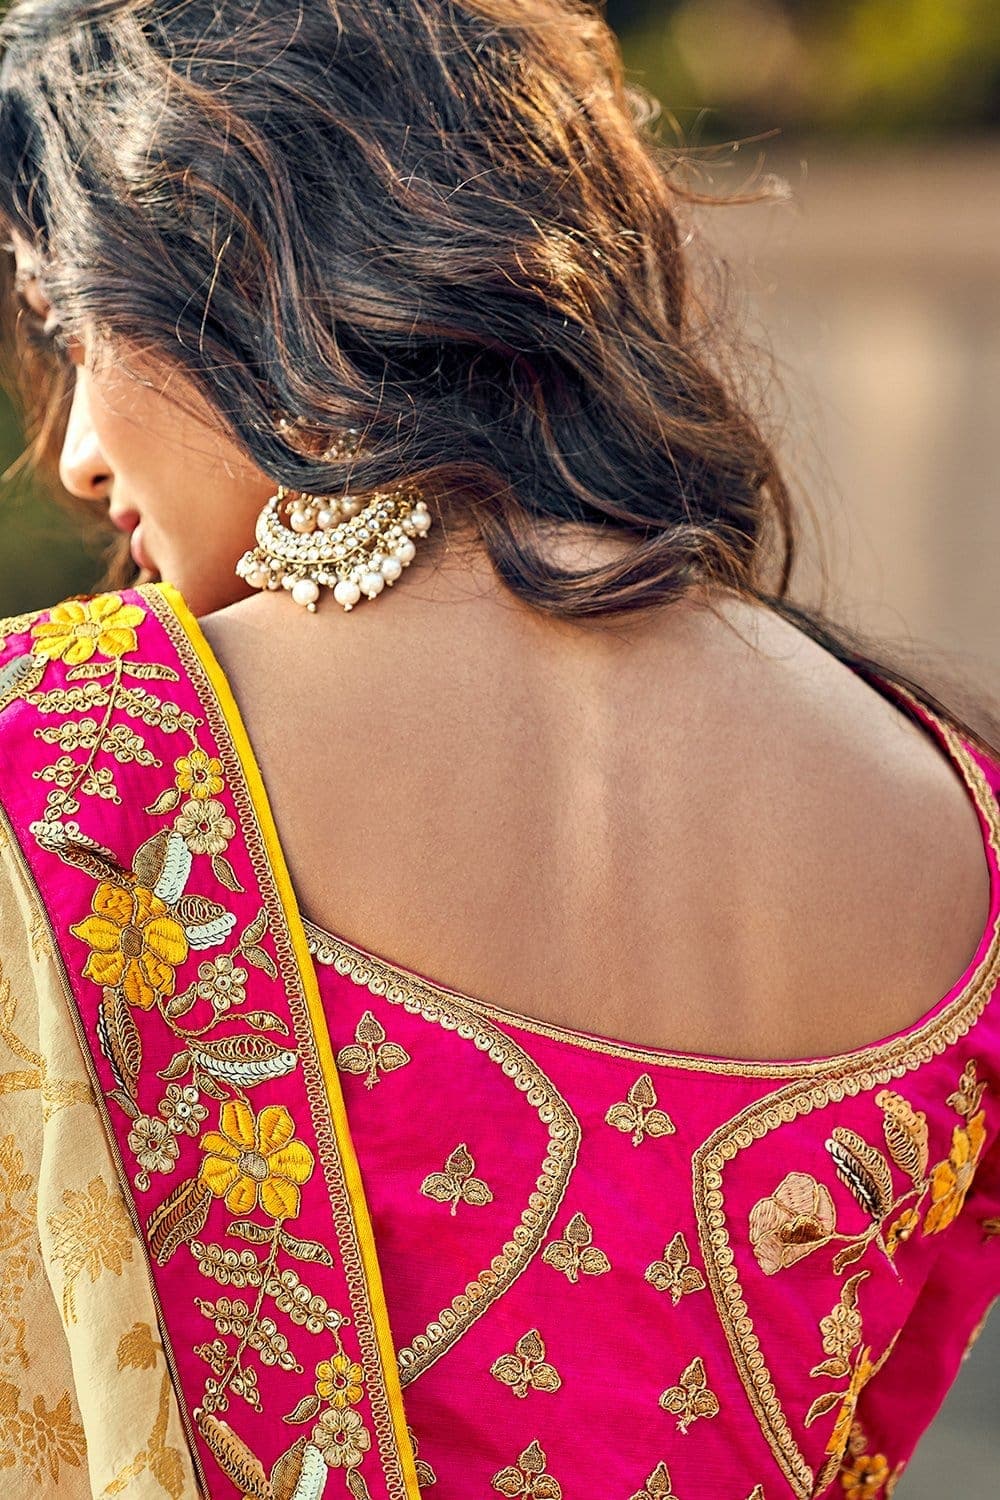 Banana yellow woven designer banarasi saree with embroidered silk blouse - Wedding sutra collection - Buy online on Karagiri - Free shipping to USA